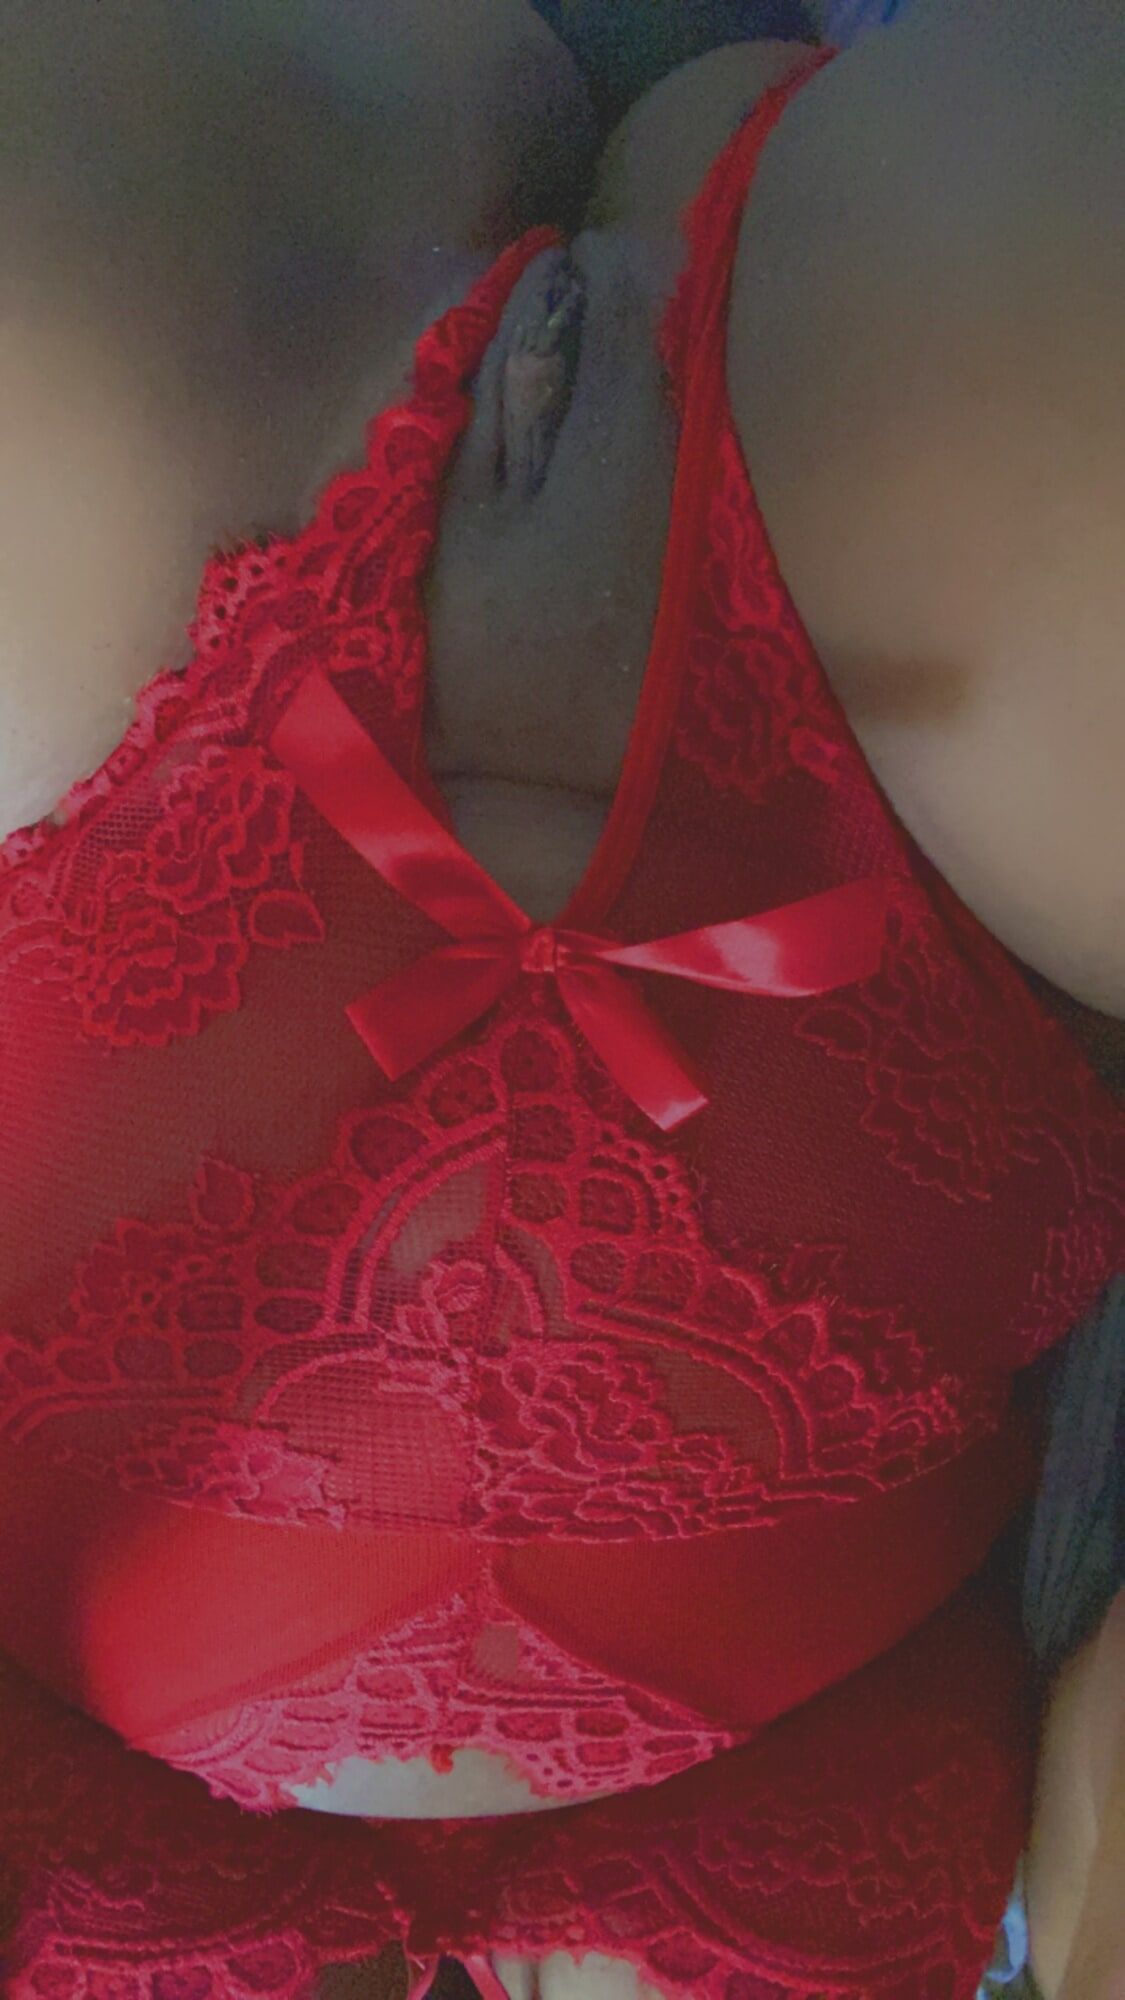 Red lingerie looks so good on me